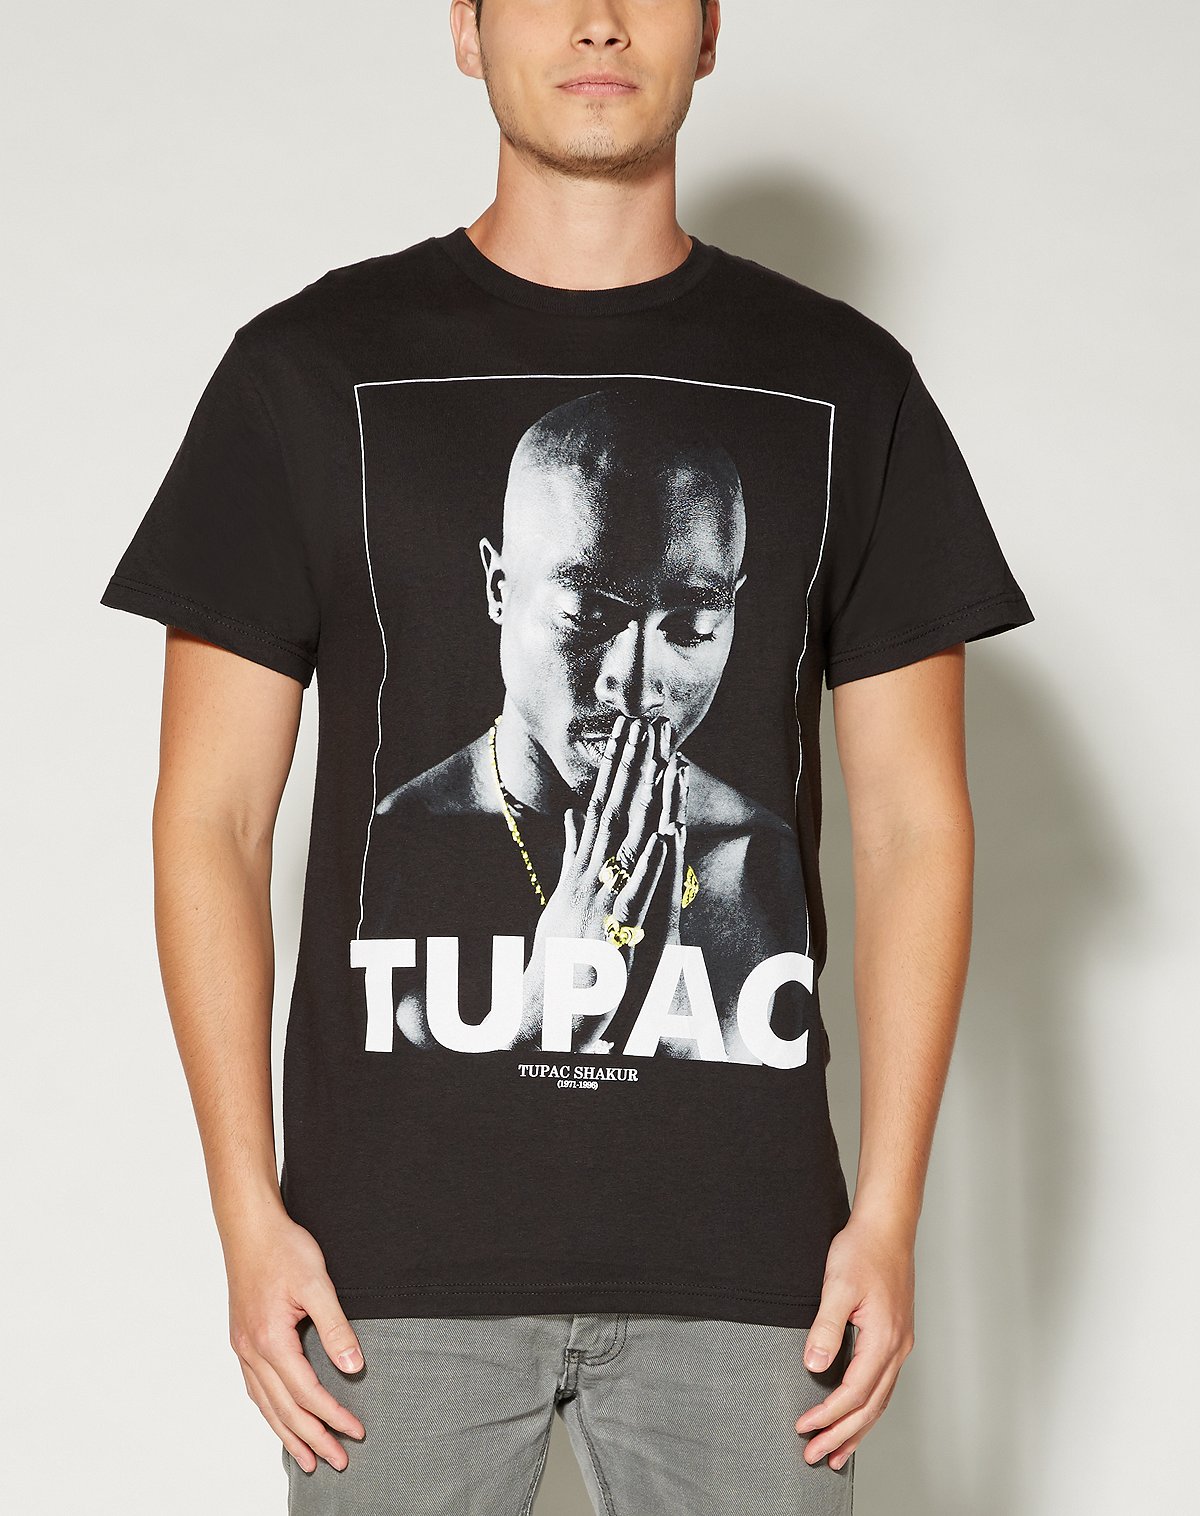 Tupac 71 T Shirt